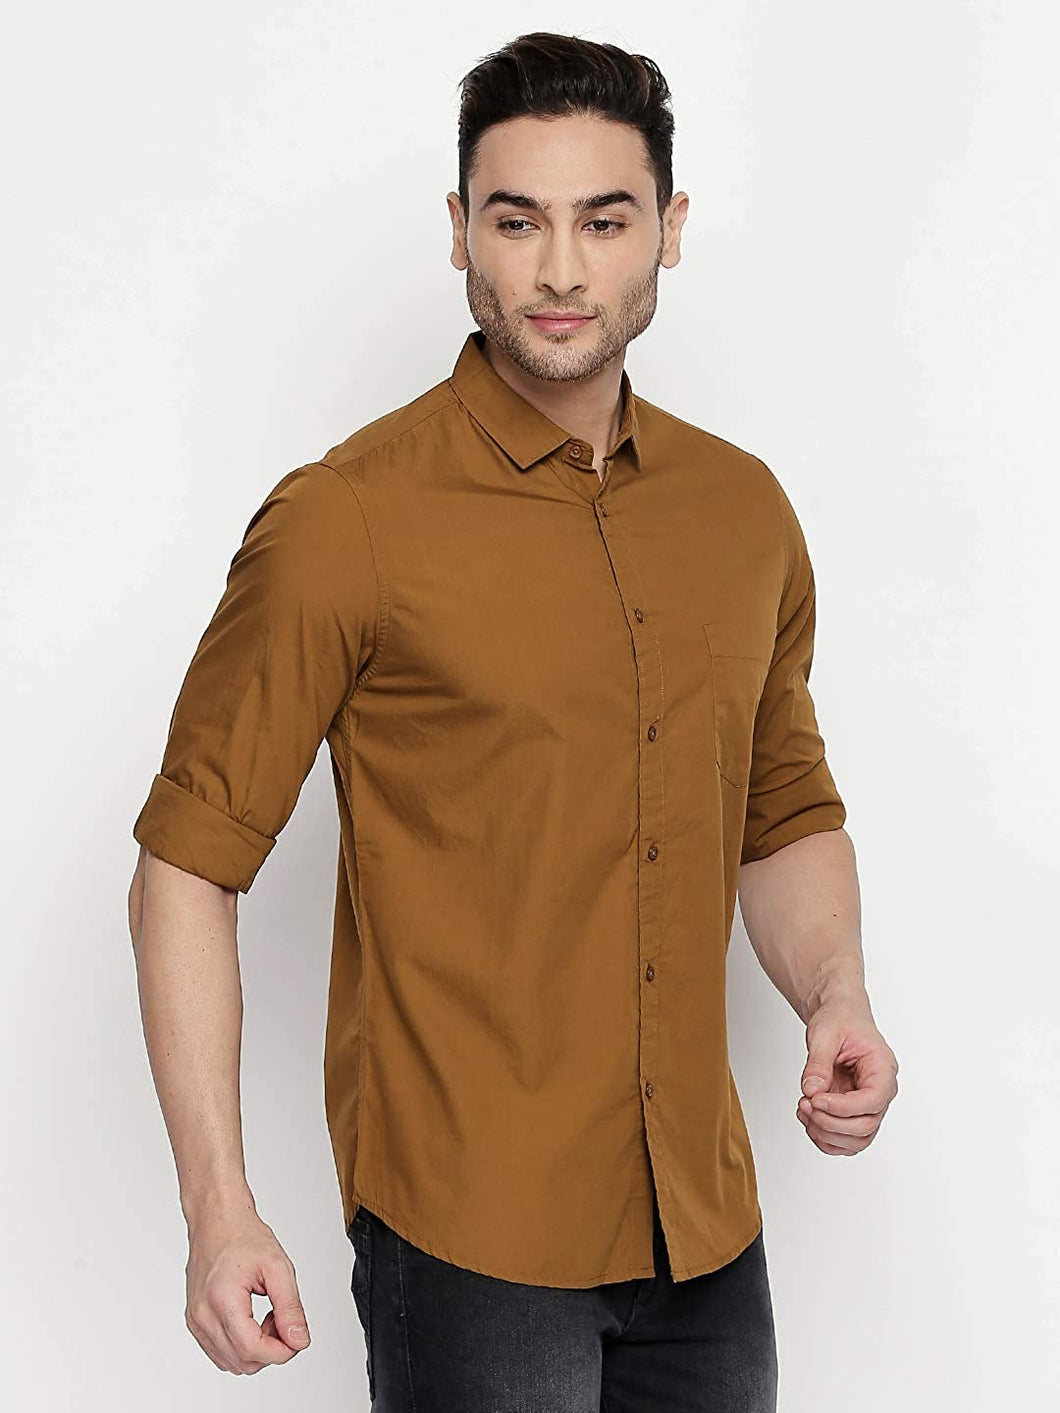 Polycotton Khaki color Full Sleeve Formal shirt